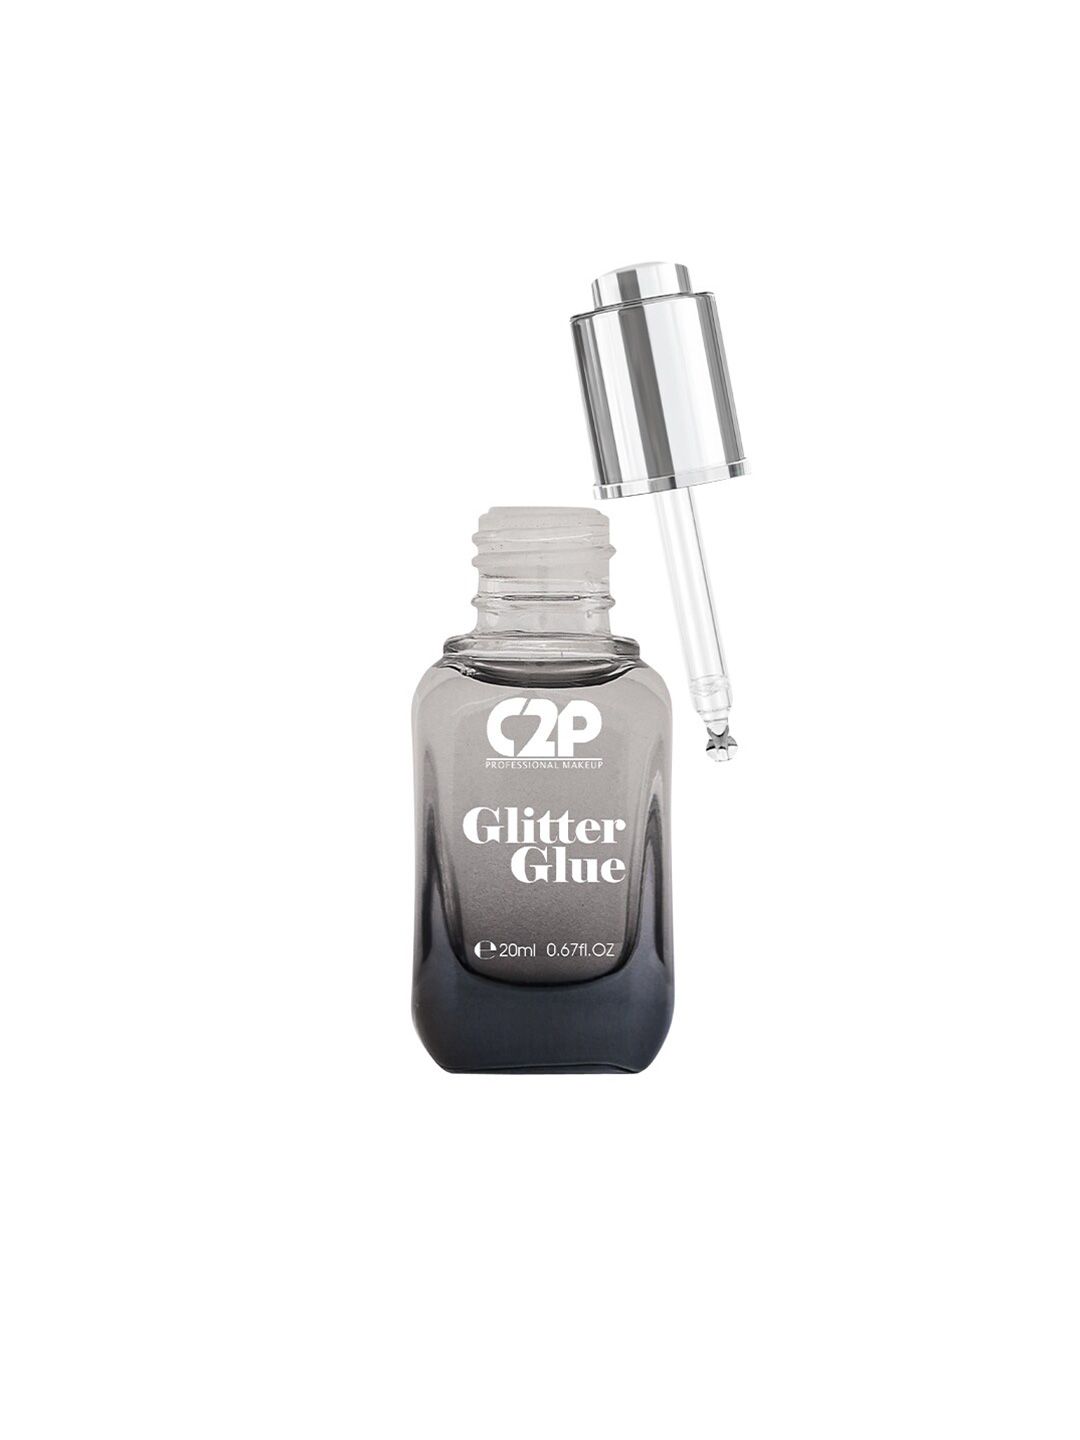 C2P PROFESSIONAL MAKEUP Eyeshadow Glitter Glue - 20 ml Price in India